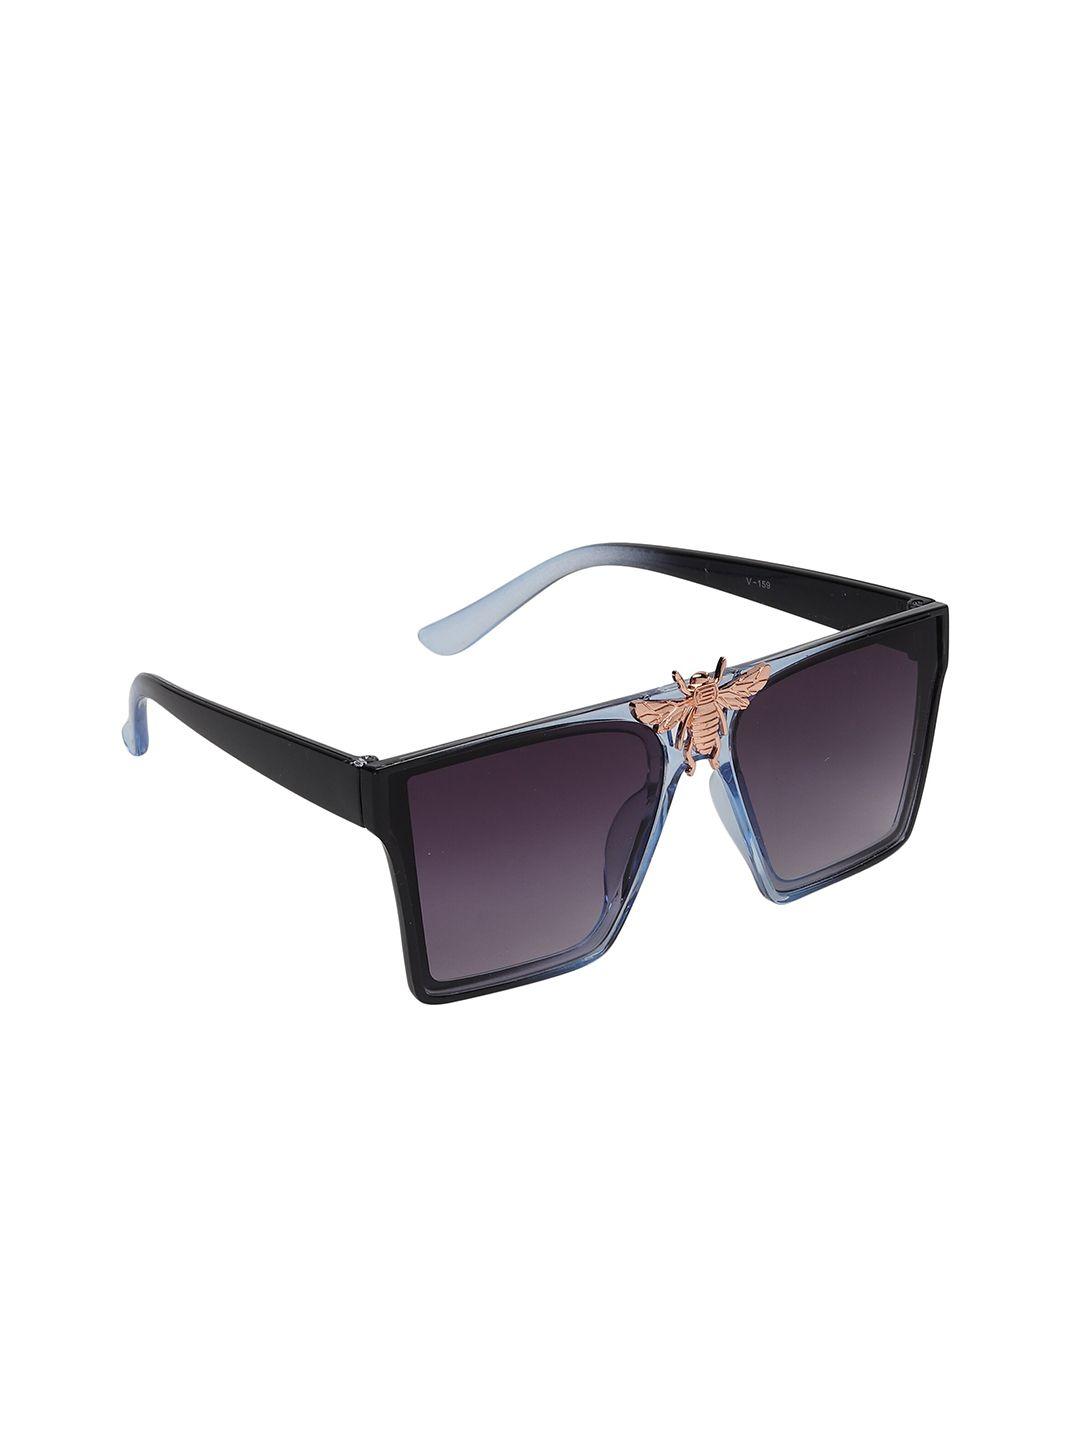 celebrity sunglasses unisex purple lens & blue full rim wayfarer sunglasses